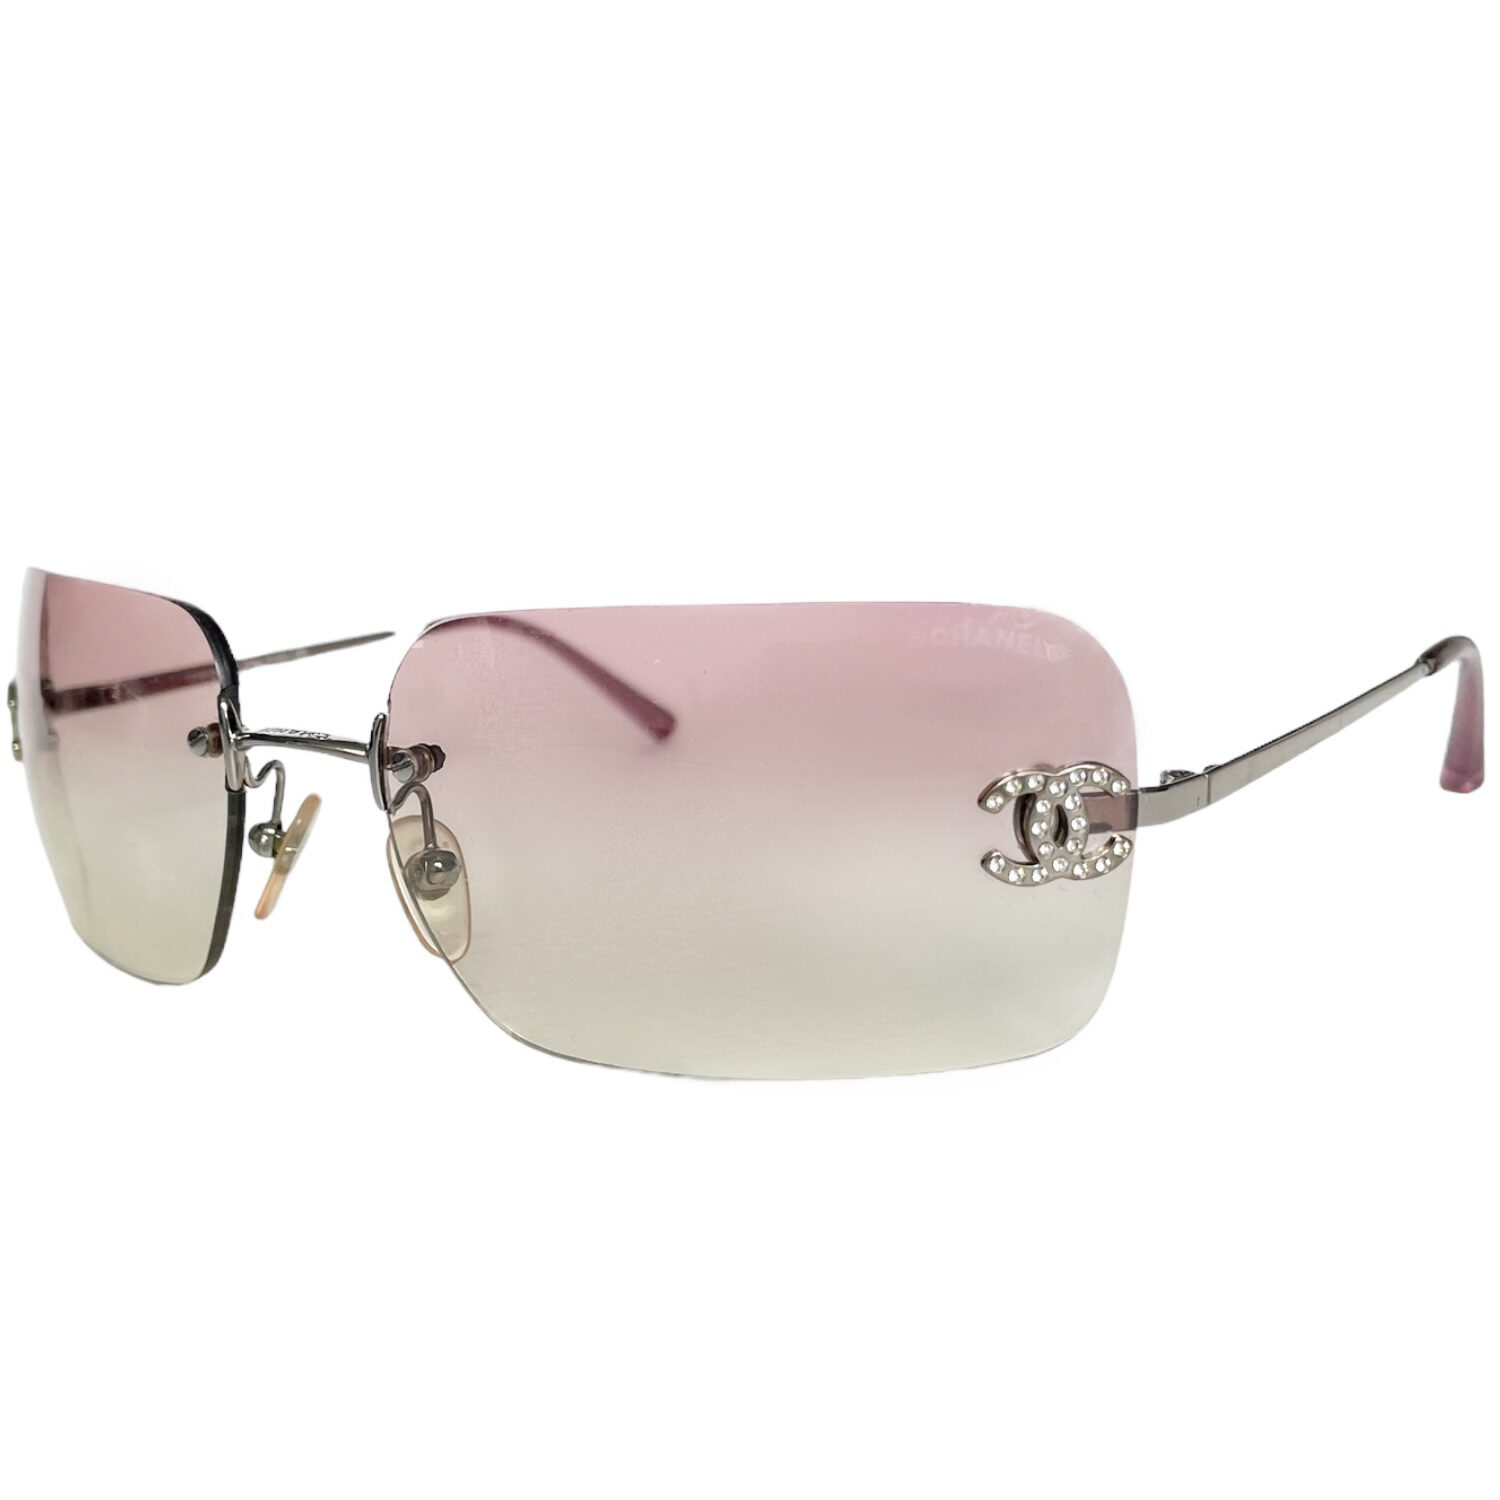 Chanel Diamante Rimless Ombre Sunglasses in Baby Pink / Silver